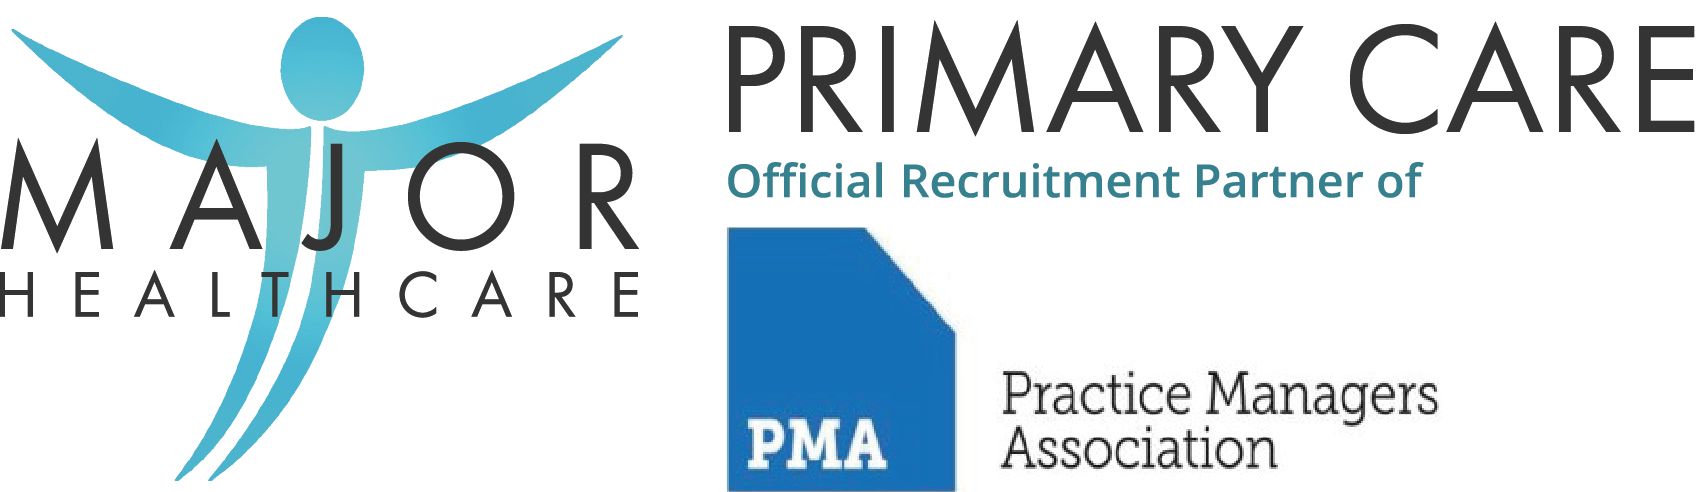 Major Primary Care Recruitment